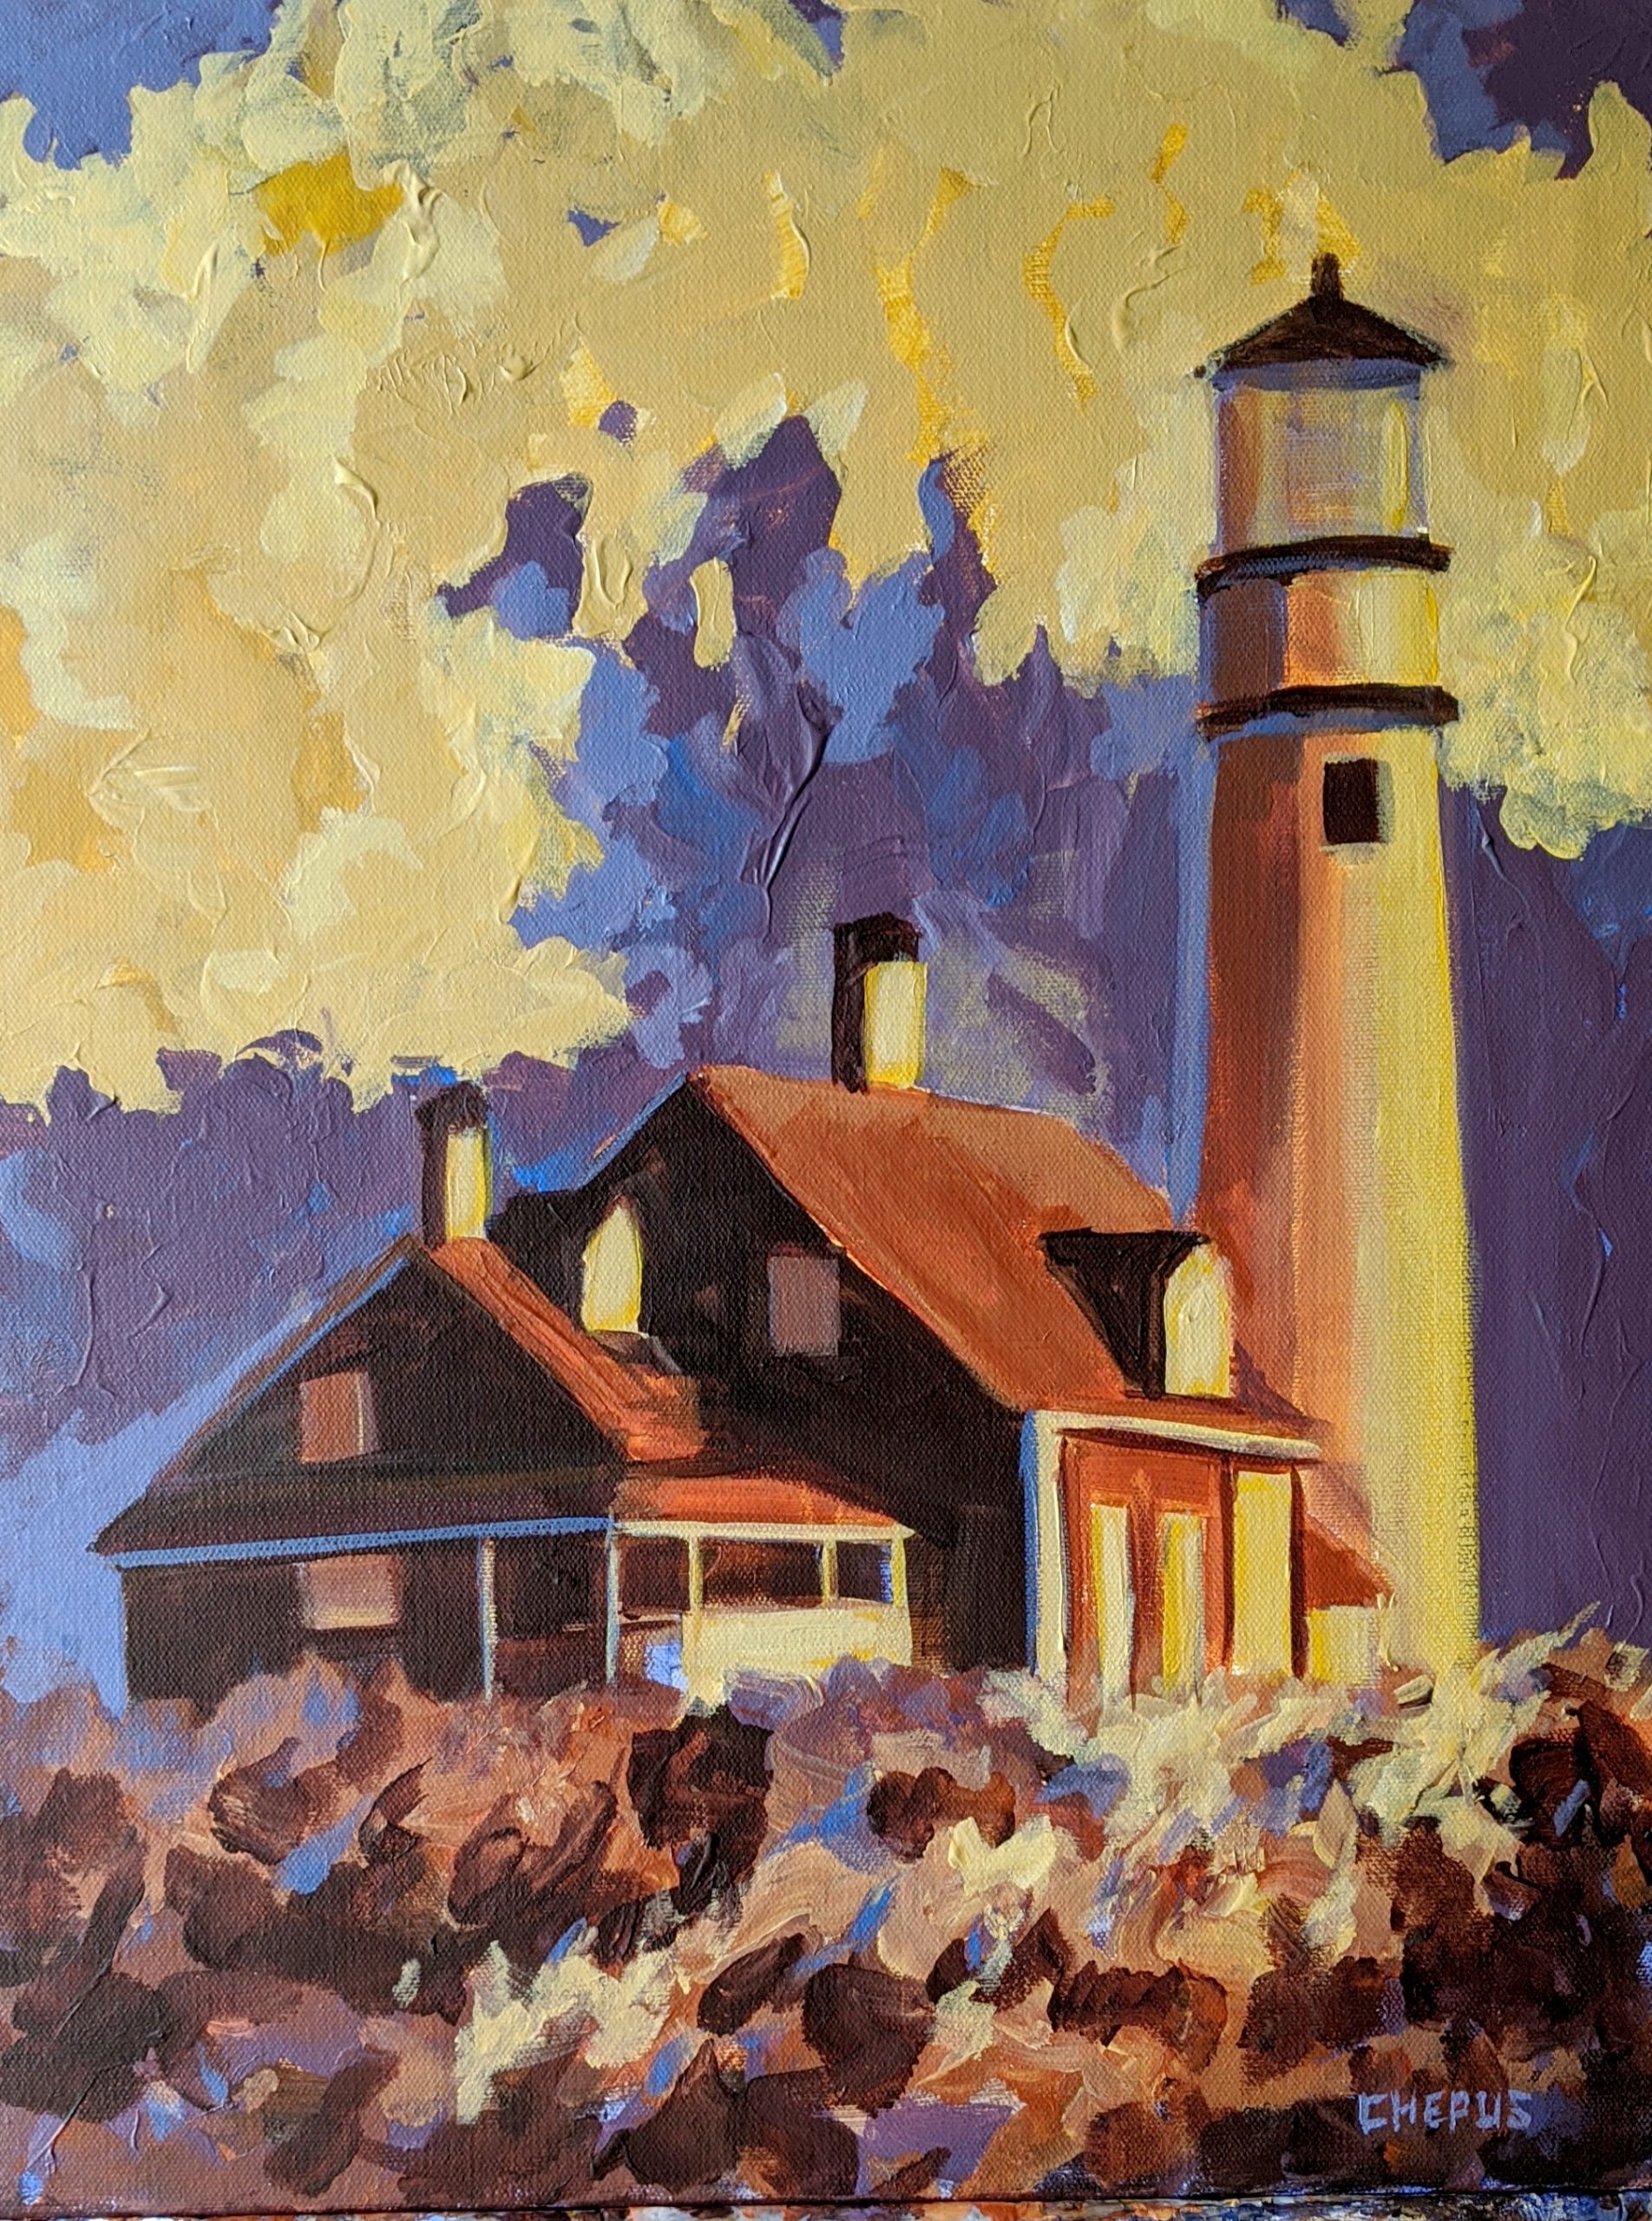 Highland Lighthouse acrylics 20x16 Sold